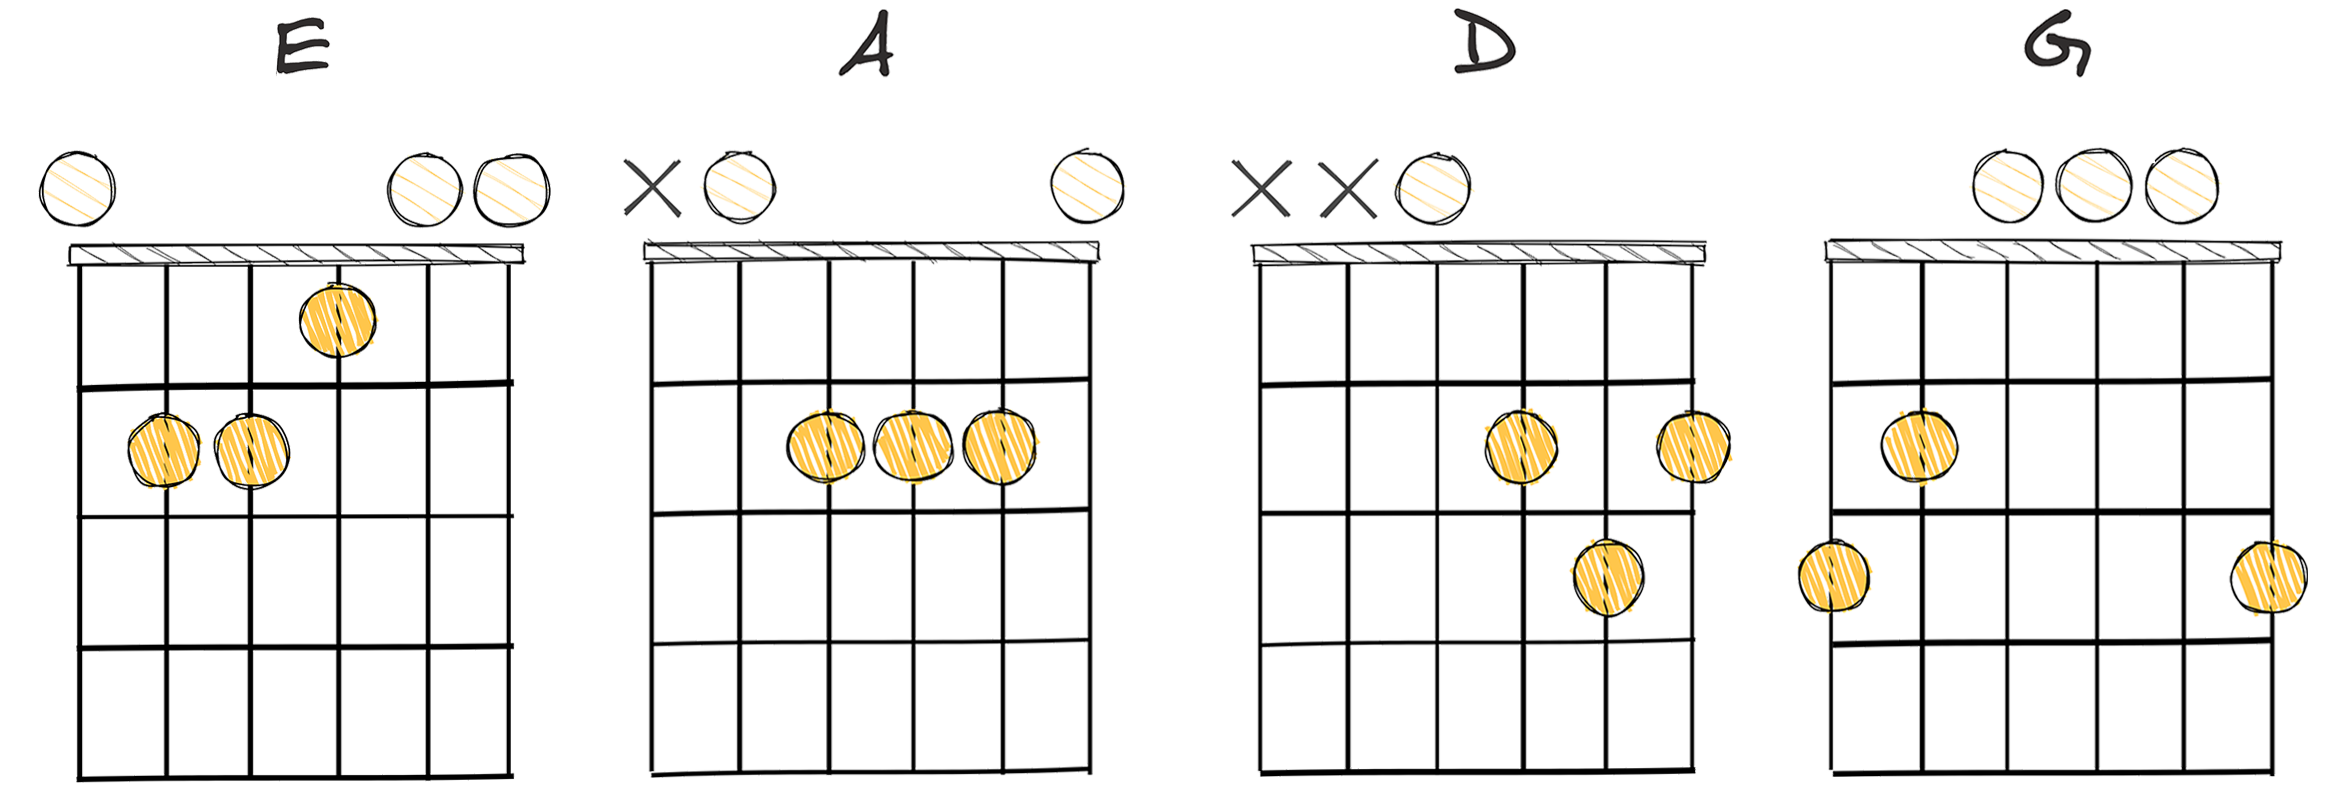 I–IV–VII–III chords diagram